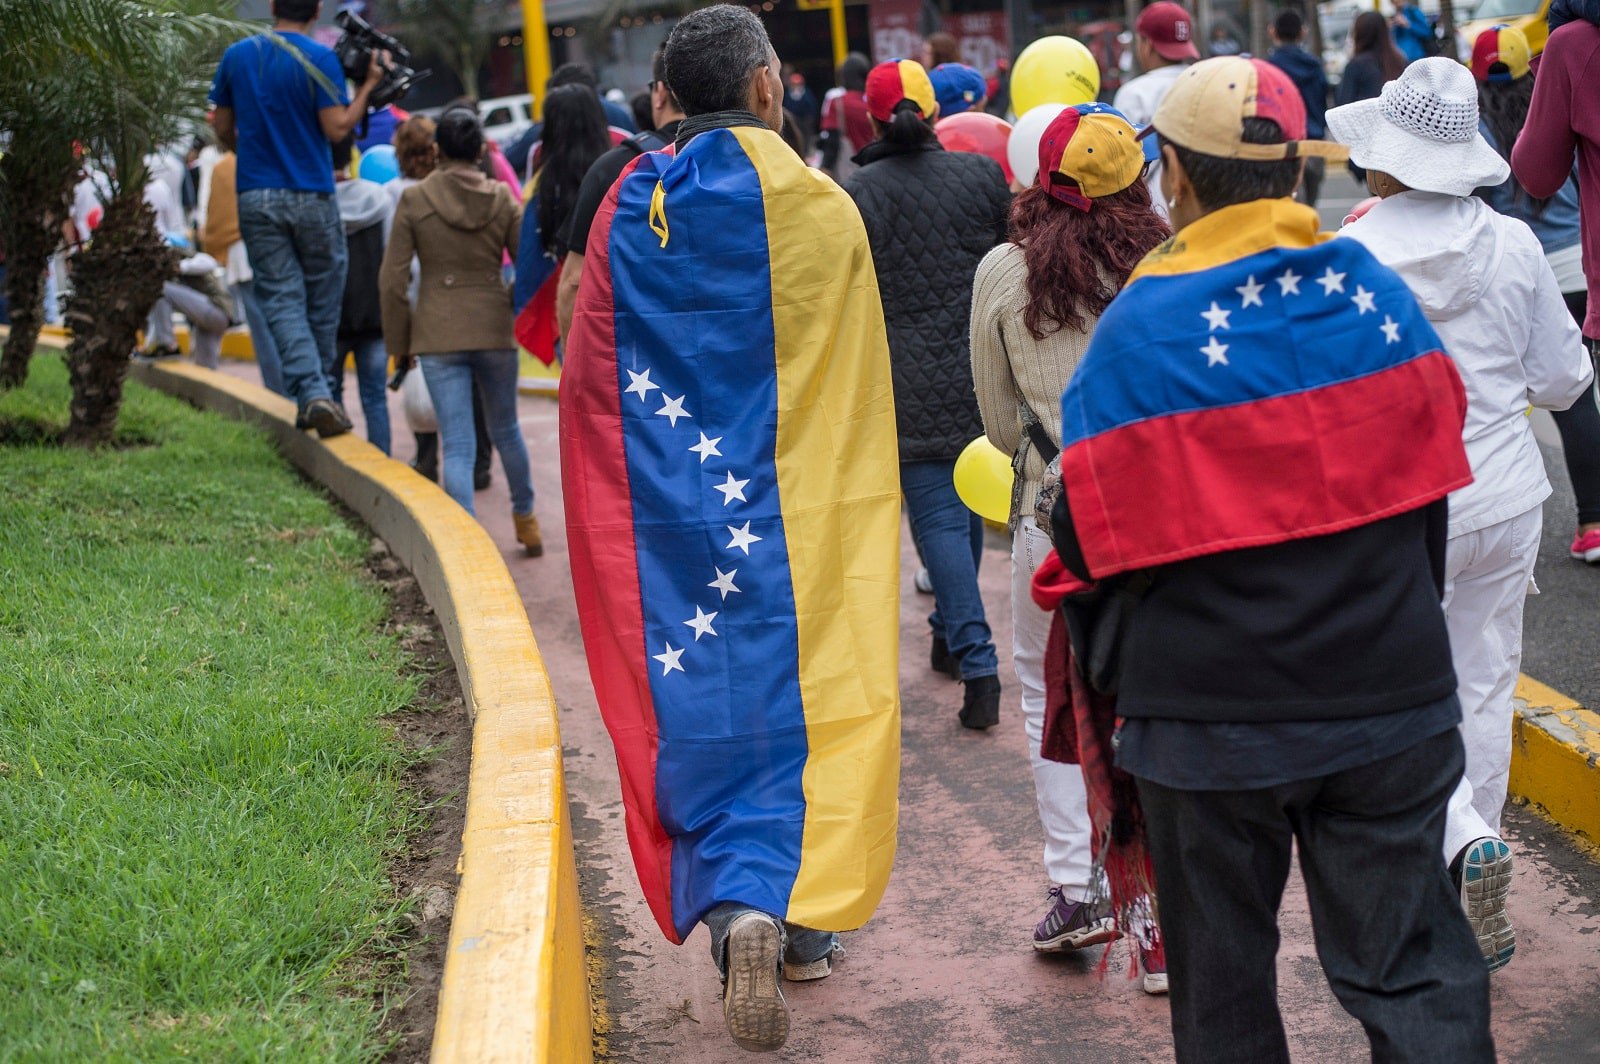 Intervienen a 44 venezolanos con situación migratoria irregular